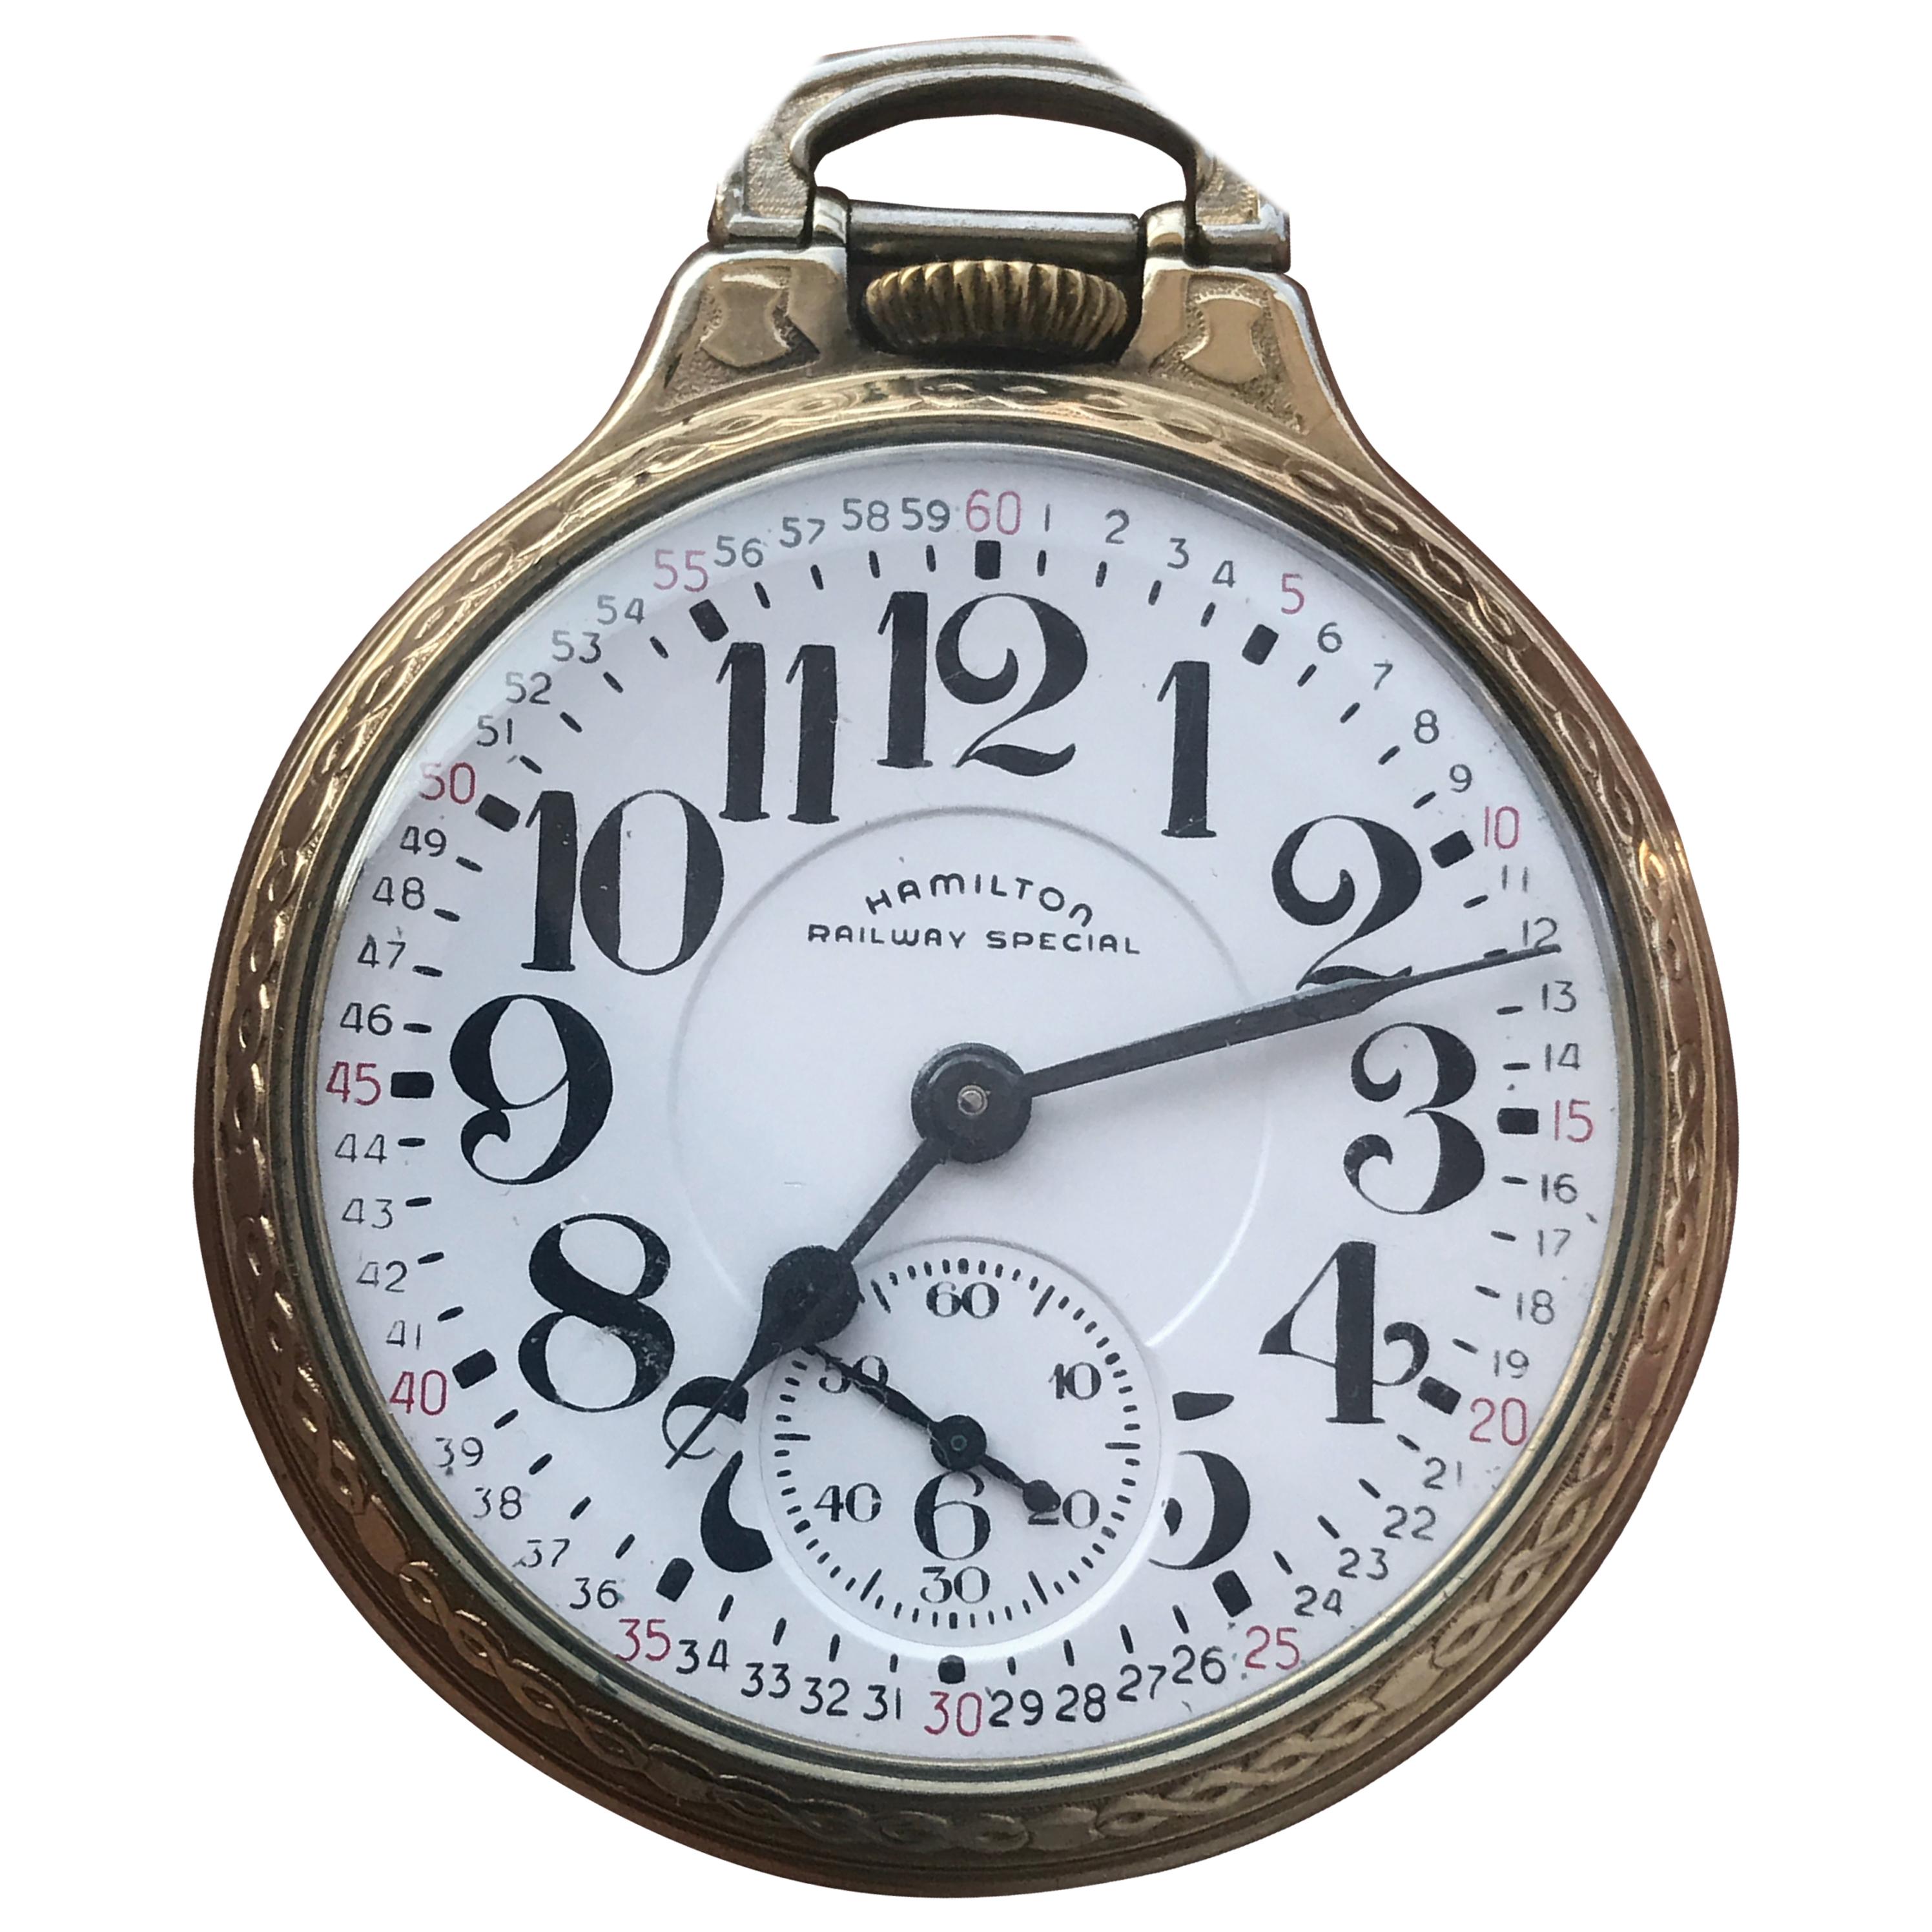 Hamilton 992b - 2 For Sale on 1stDibs | hamilton 992b for sale, hamilton  992b railroad pocket watch value, hamilton railway special pocket watch